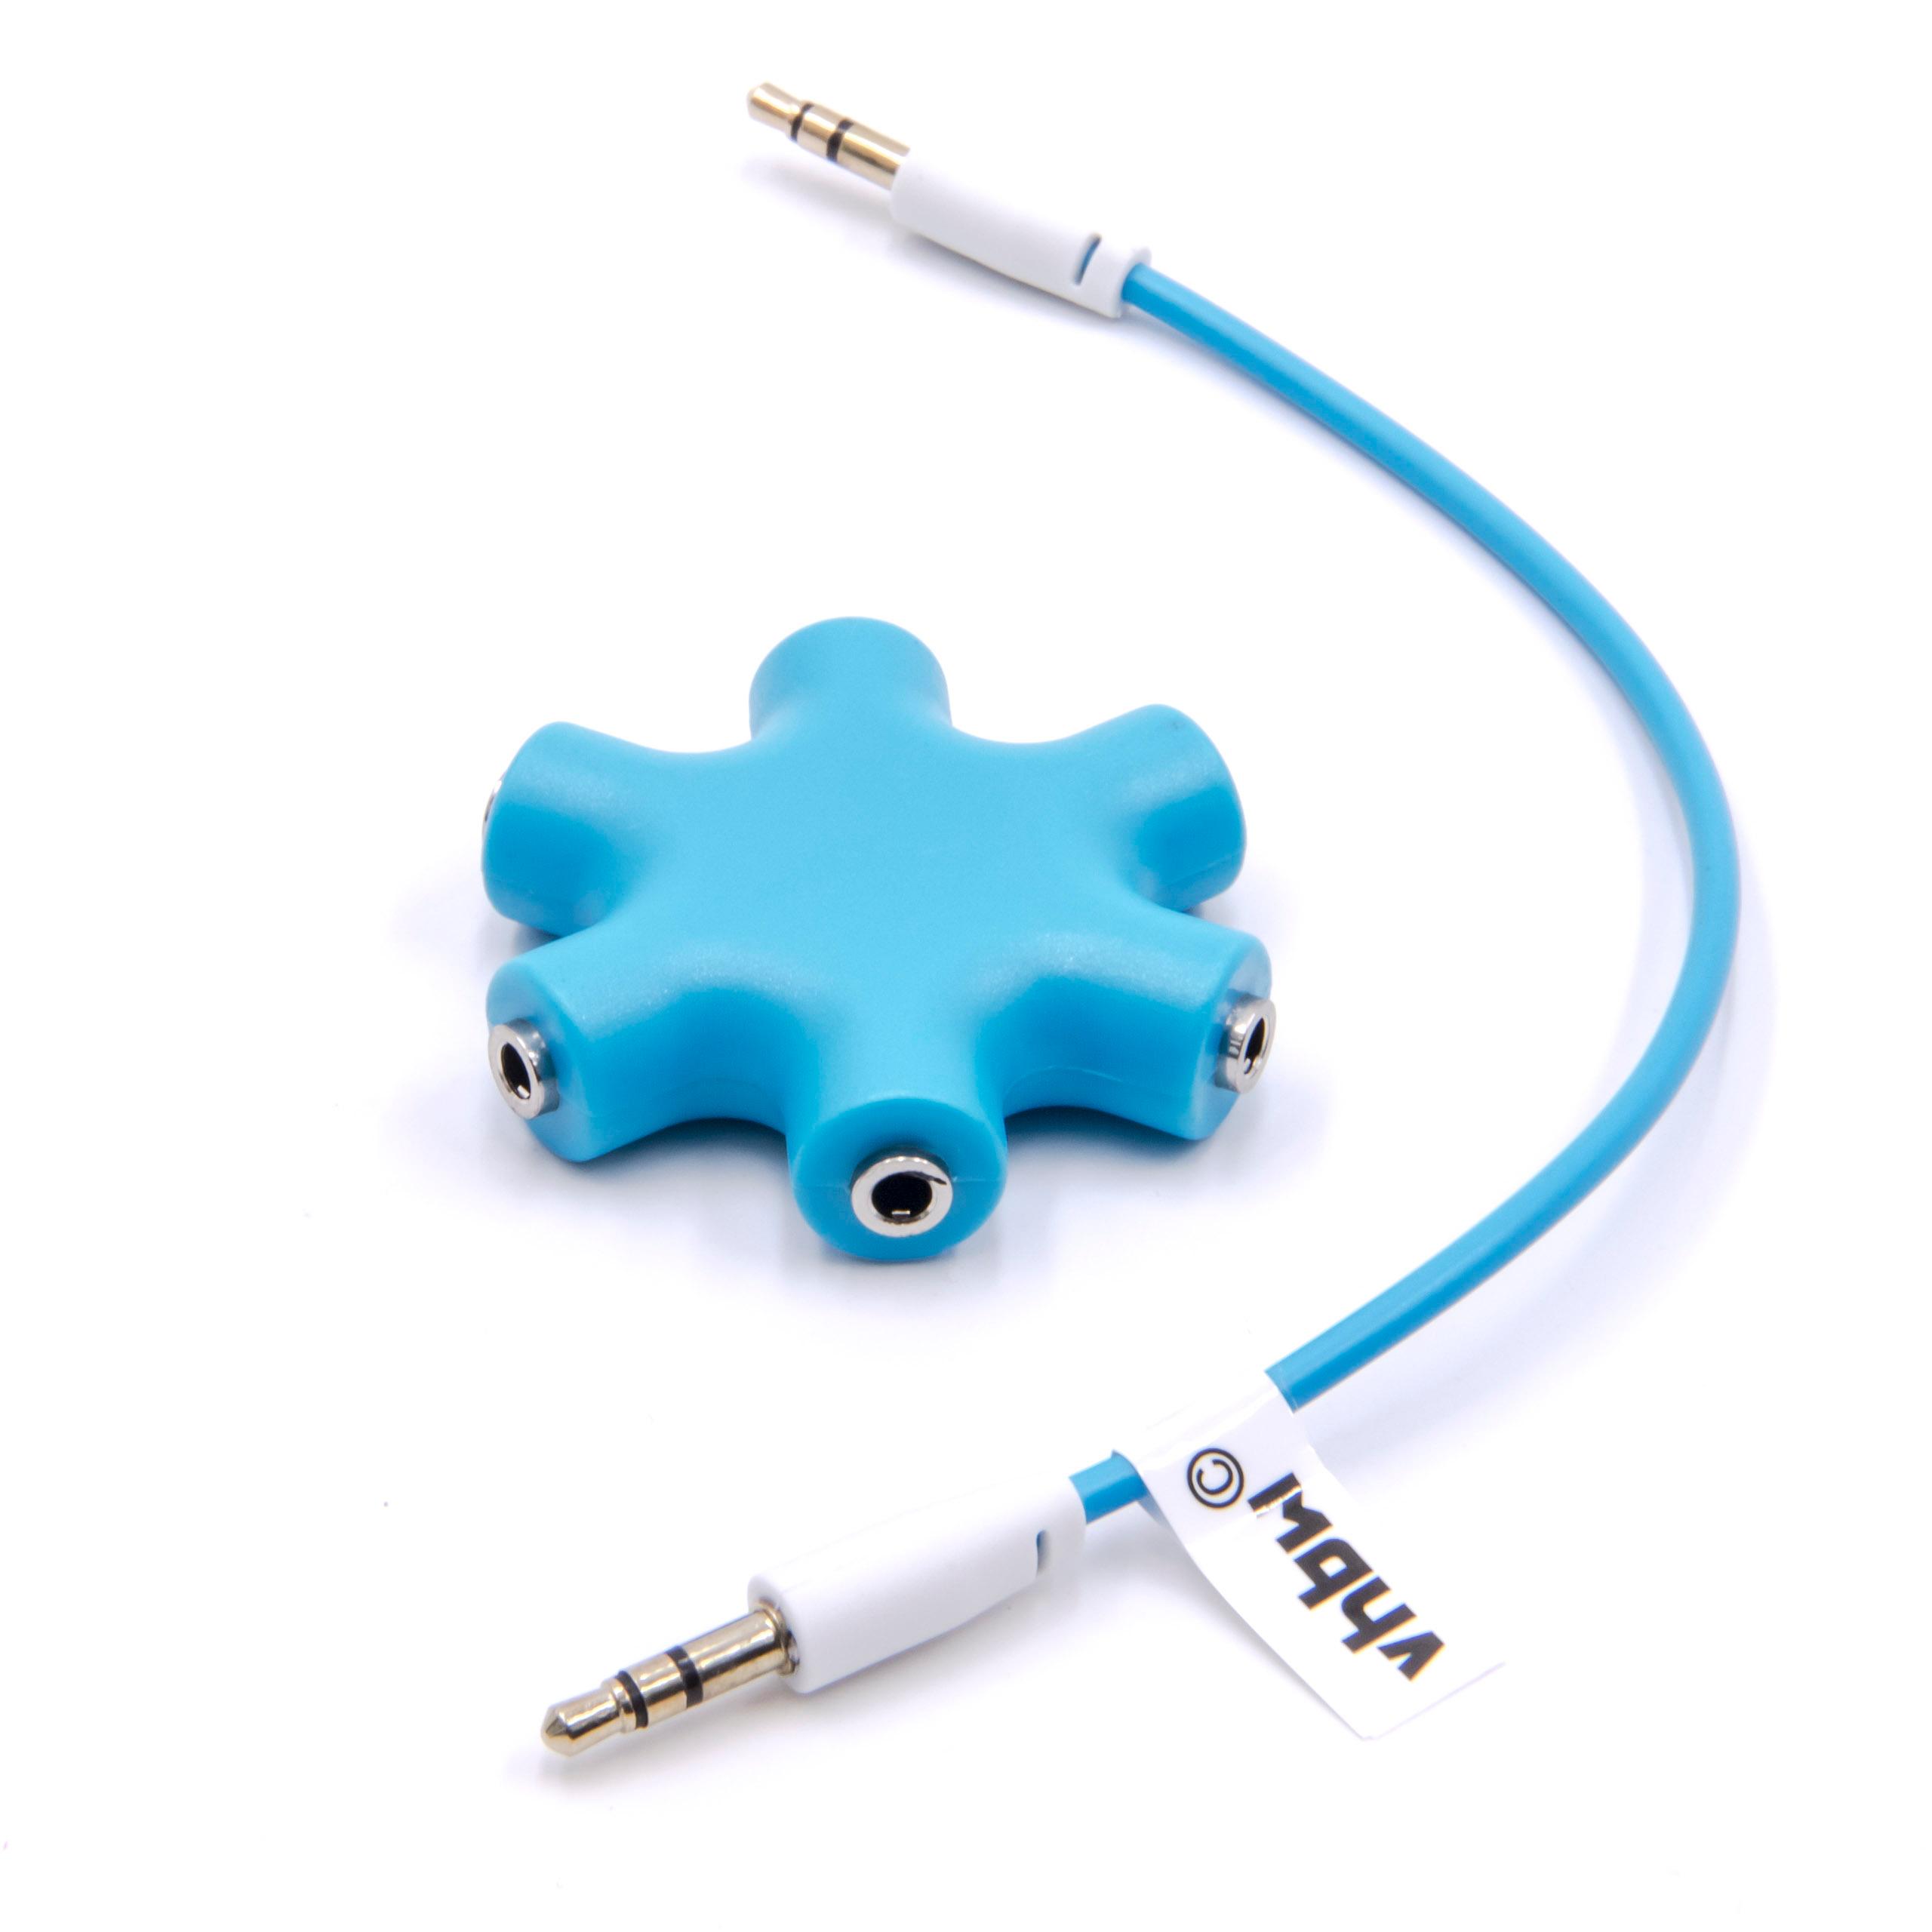 vhbw Multi Audio Splitter 5-Way AUX Headphone Splitter blue for Headphones, Speakers, Devices with 3.5mm Audio